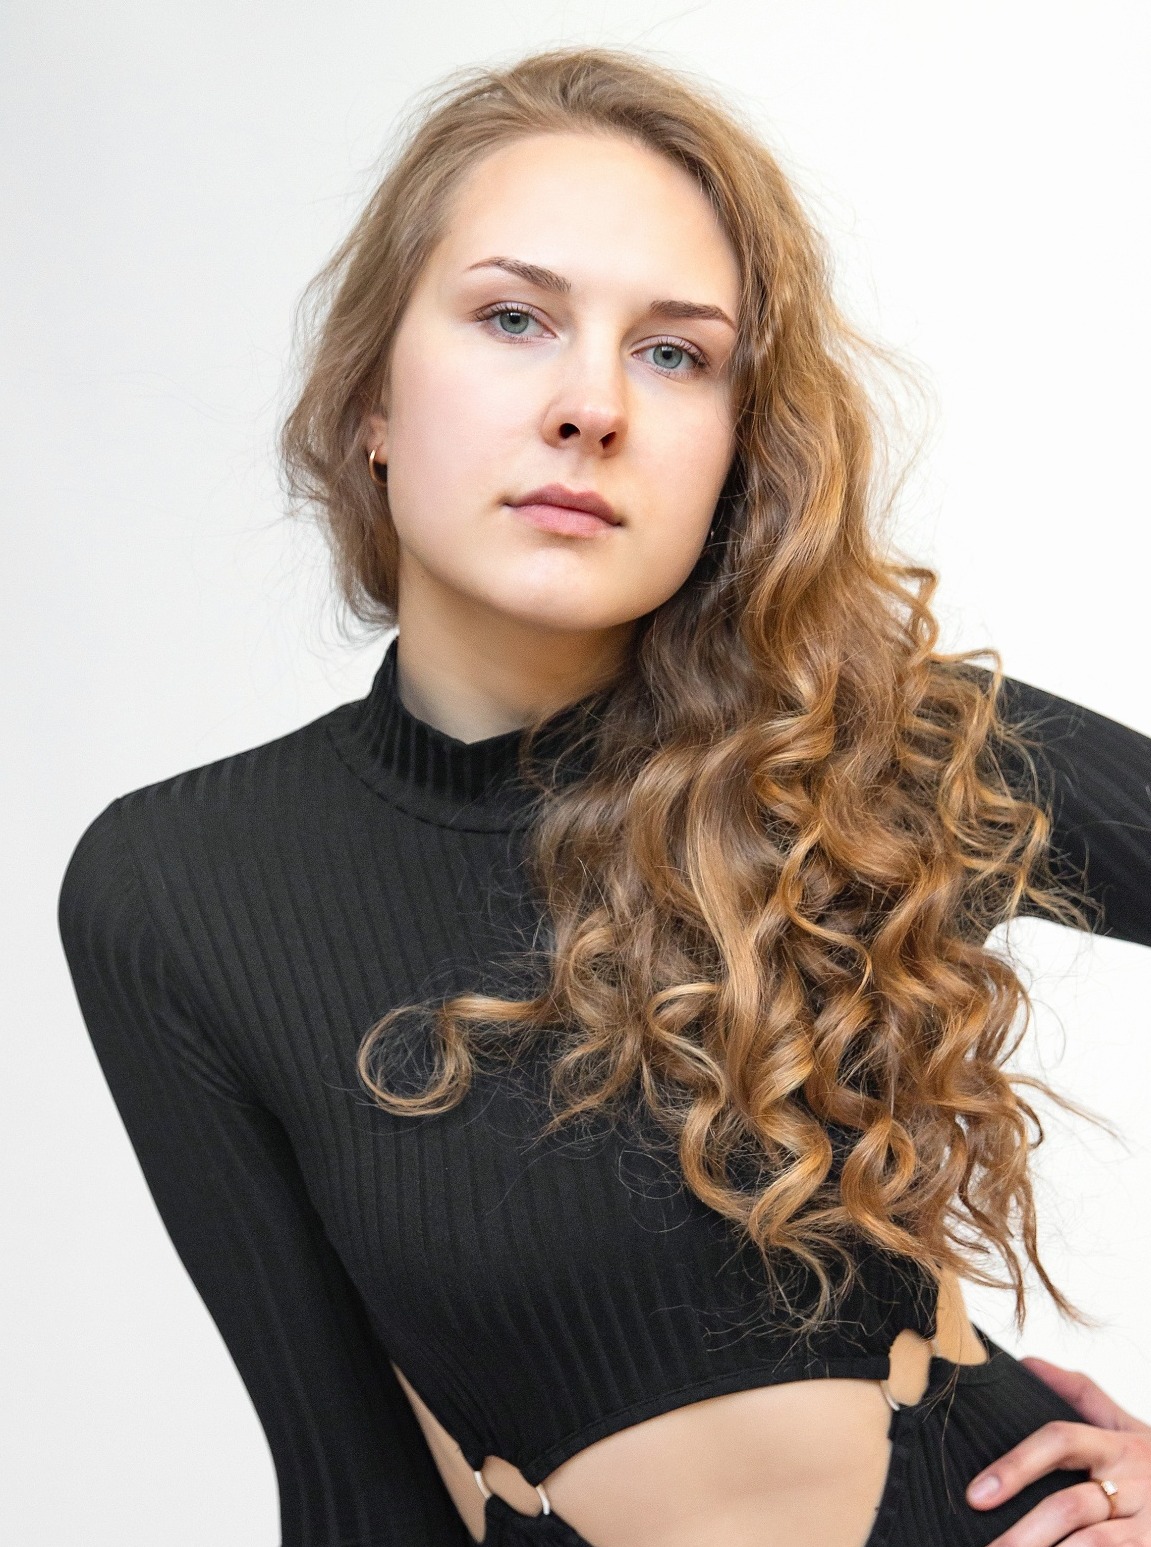 Lizaveta from London | Portfolio & Profile - Model, Hostess | MMG Talent